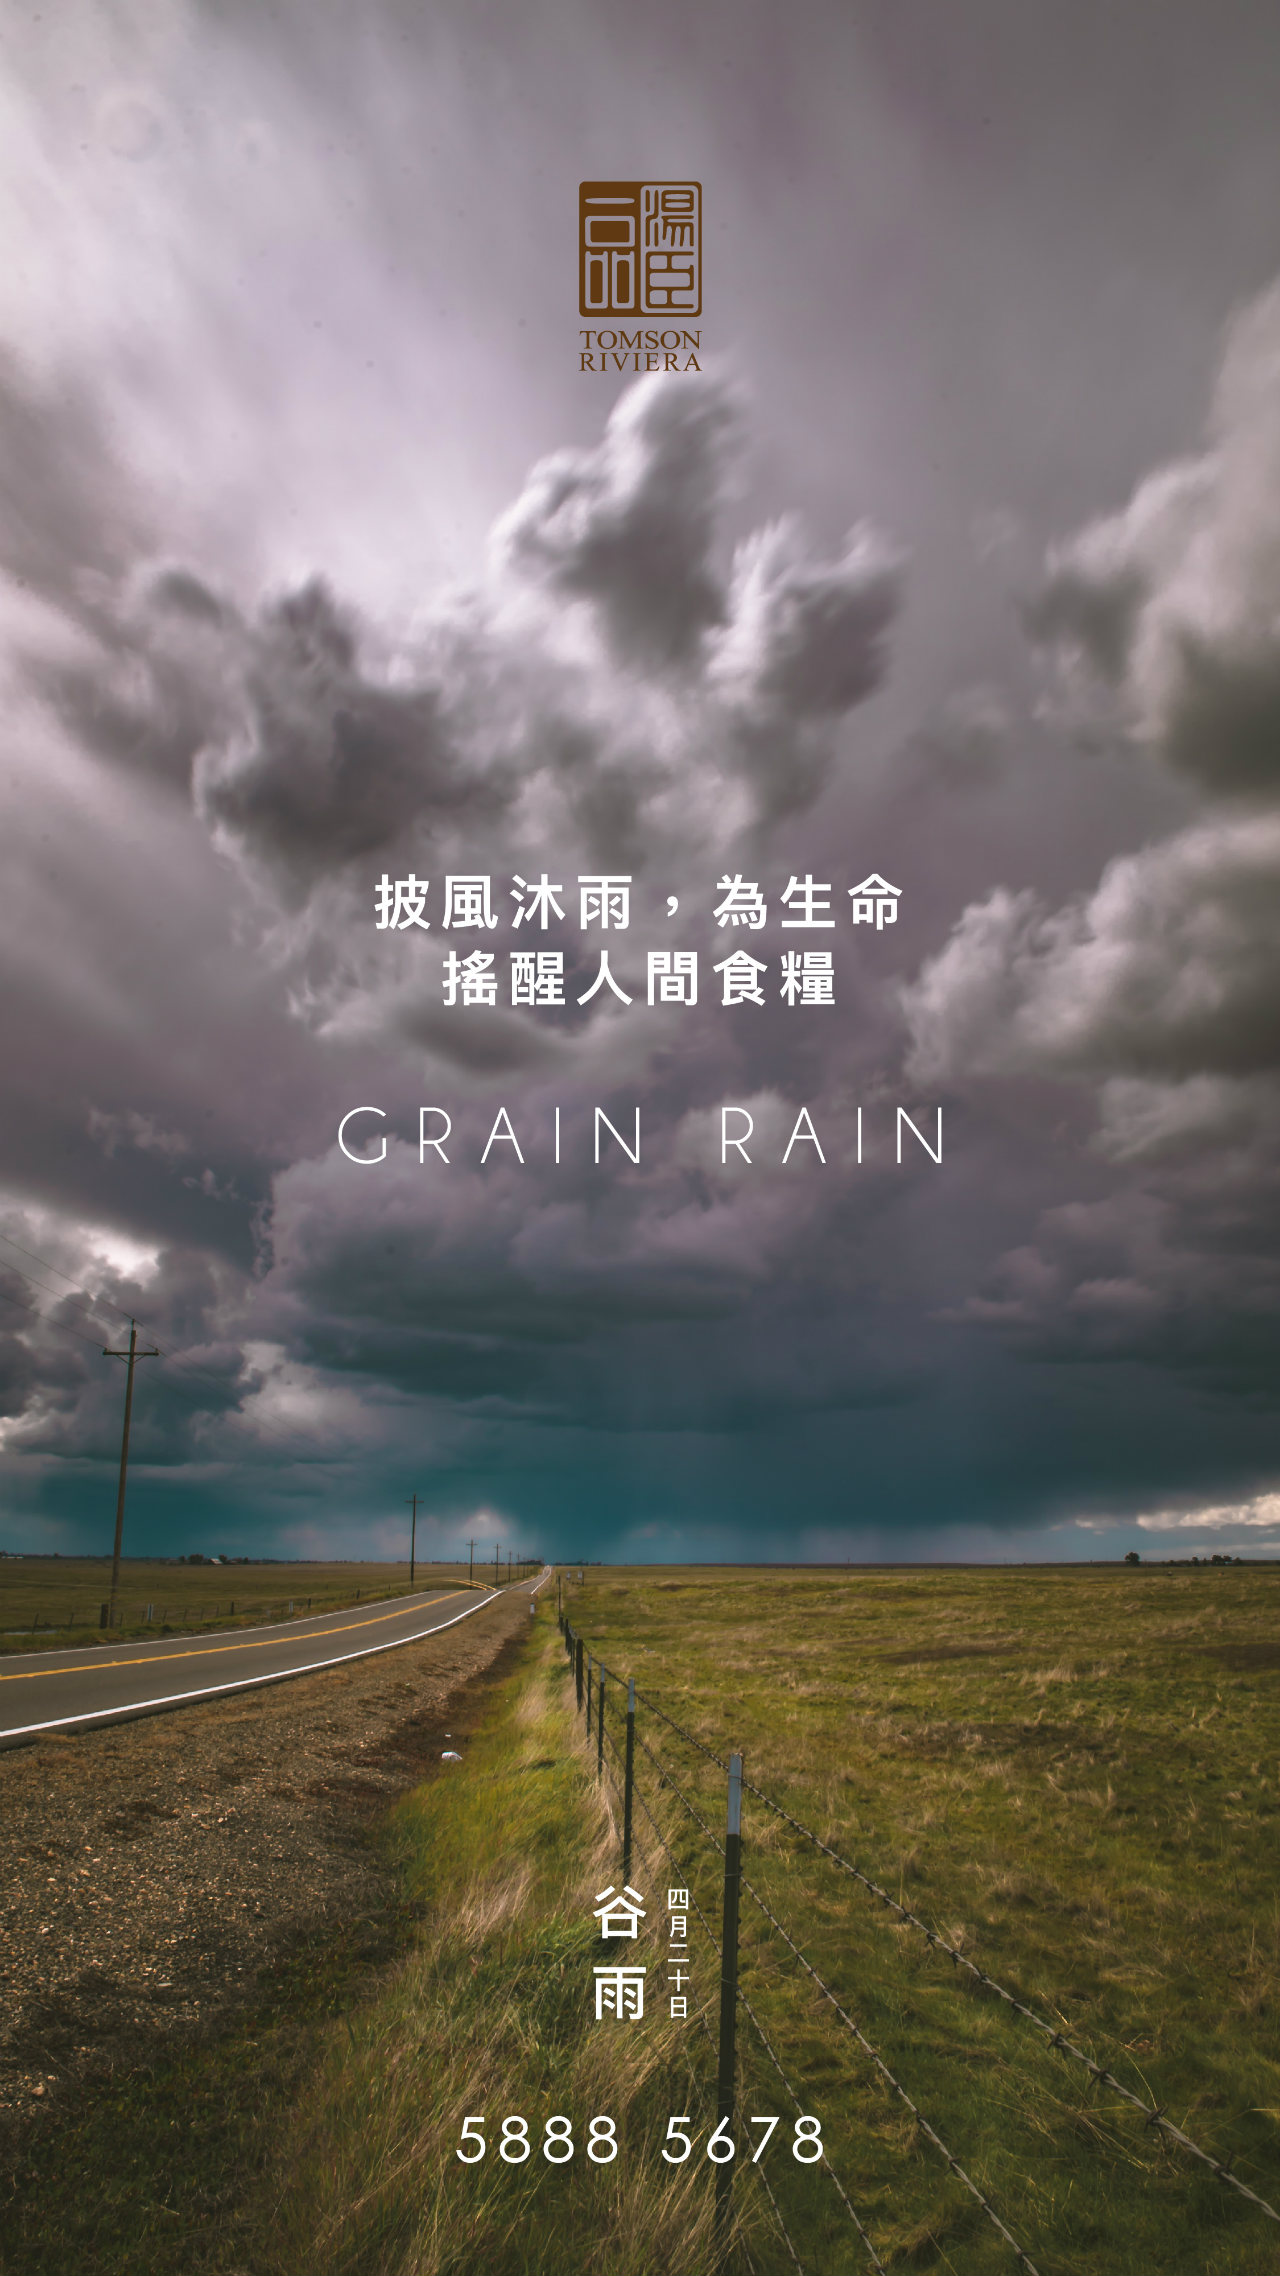 Grain rain